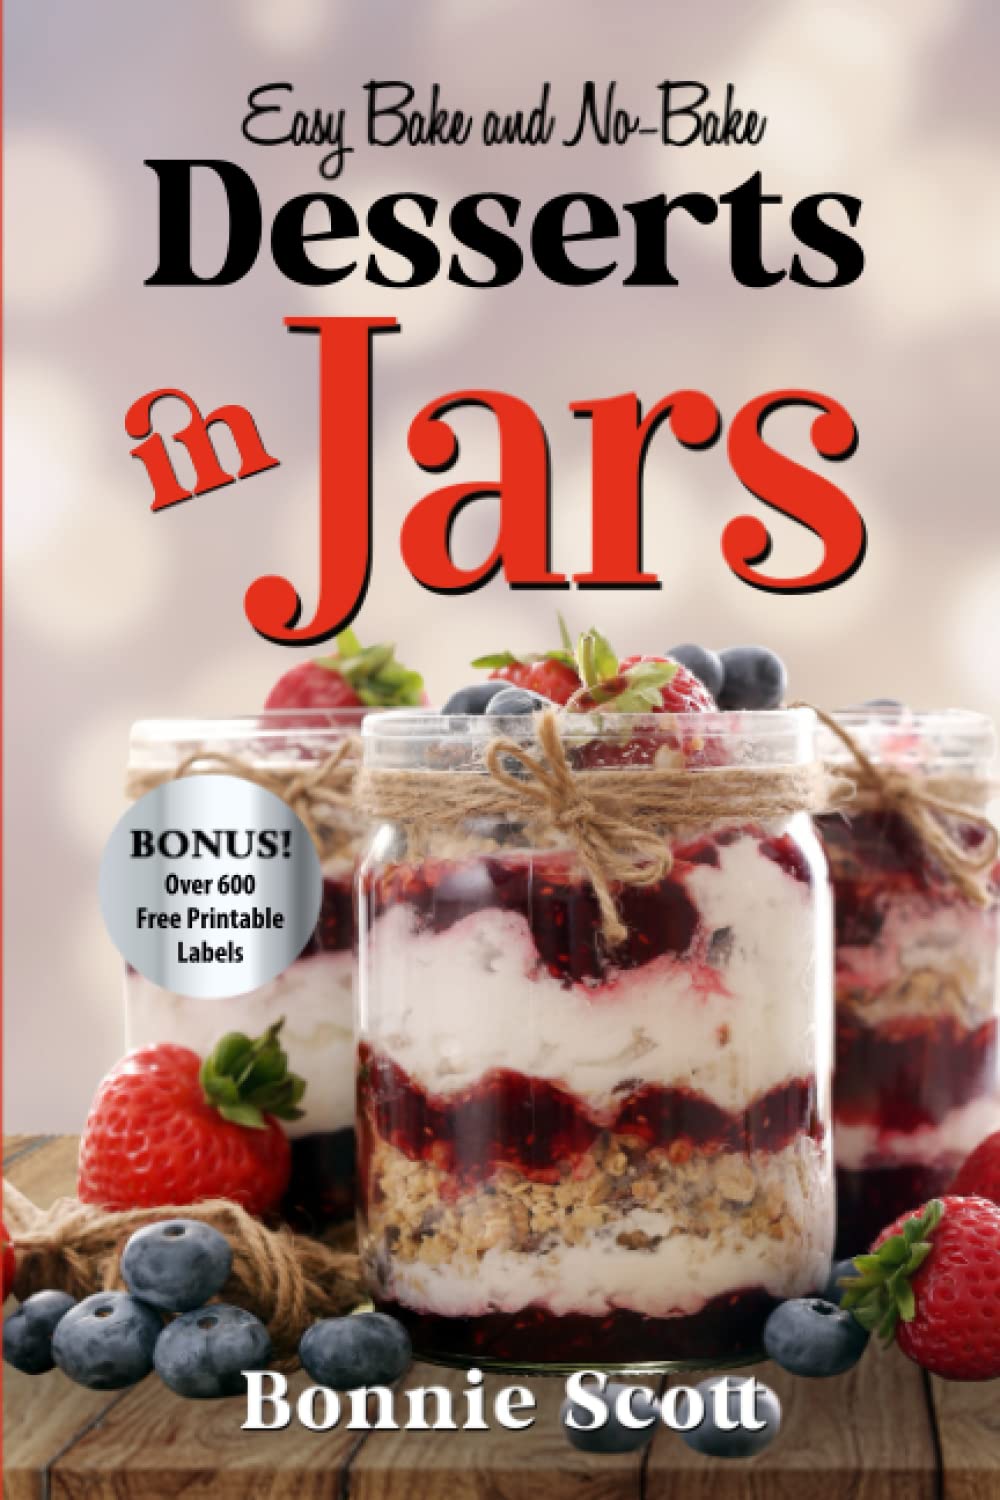 Desserts In Jars (100 More Easy Recipes in Jars)